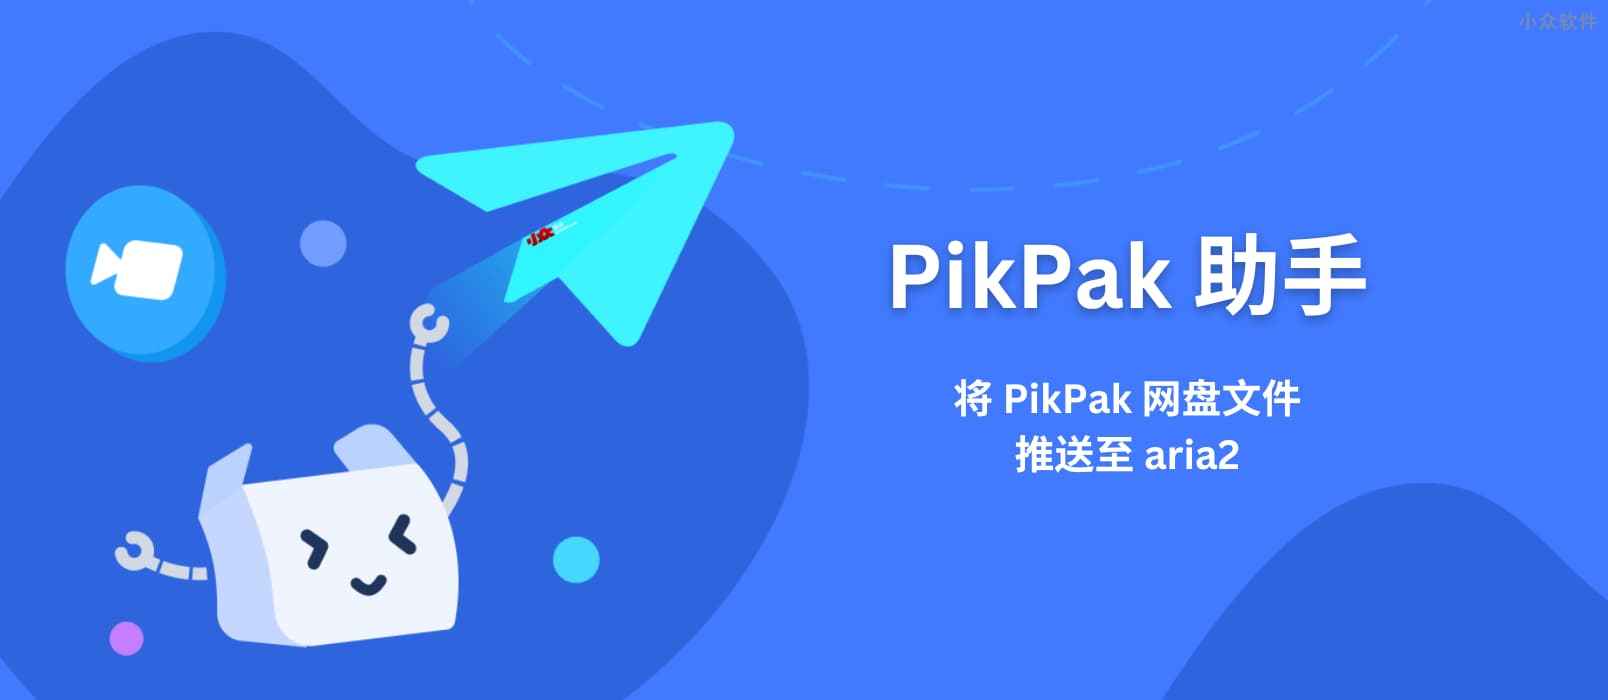 PikPak 助手 – 将 PikPak 网盘文件推送至 aria2[油猴脚本]